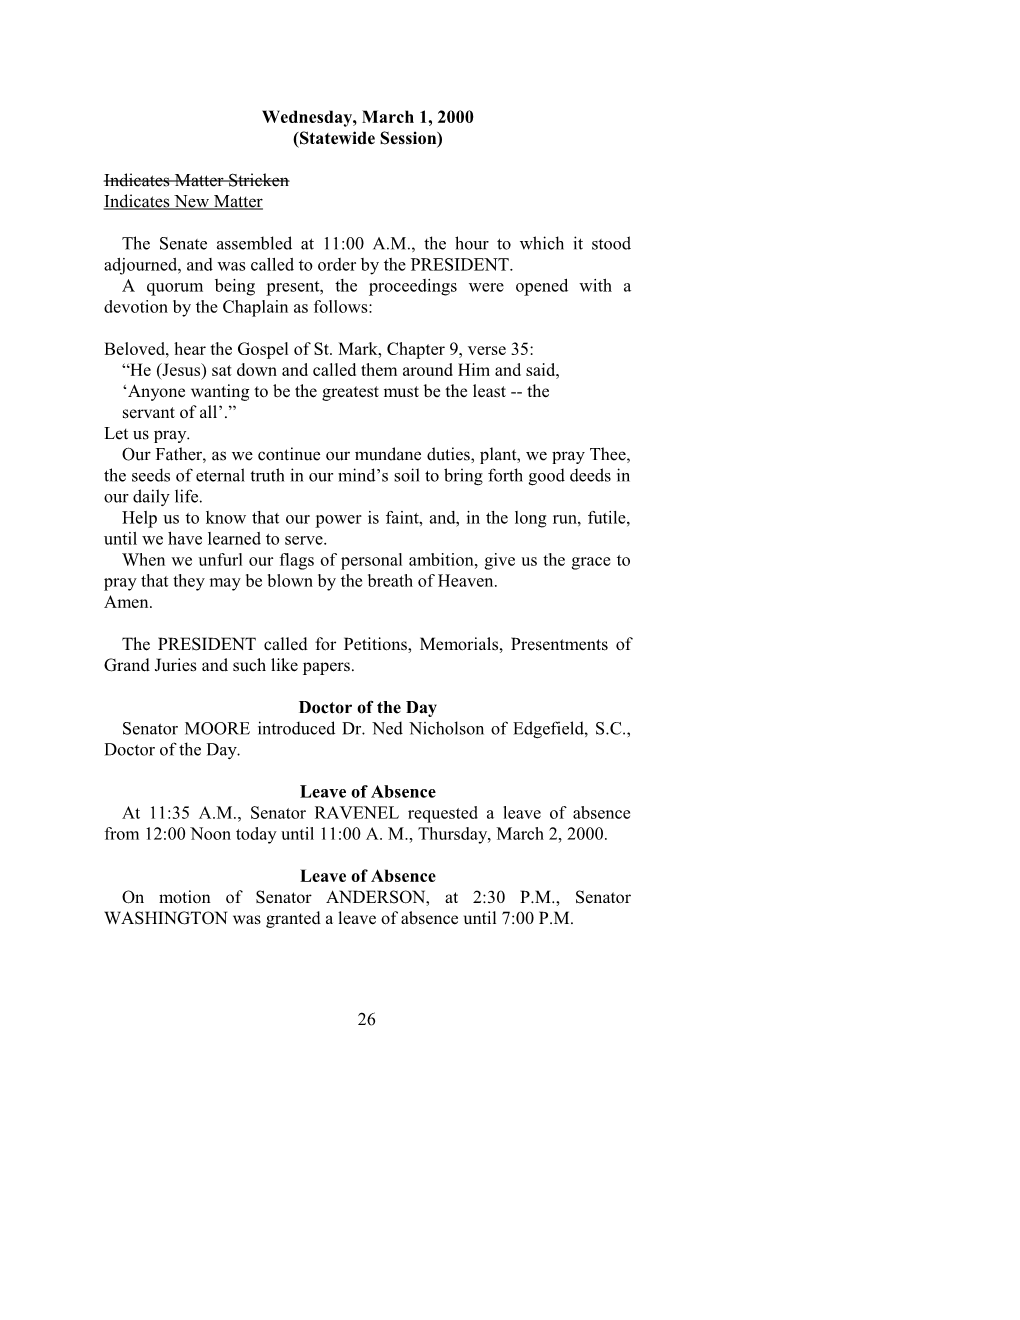 Senate Journal for Mar. 1, 2000 - South Carolina Legislature Online